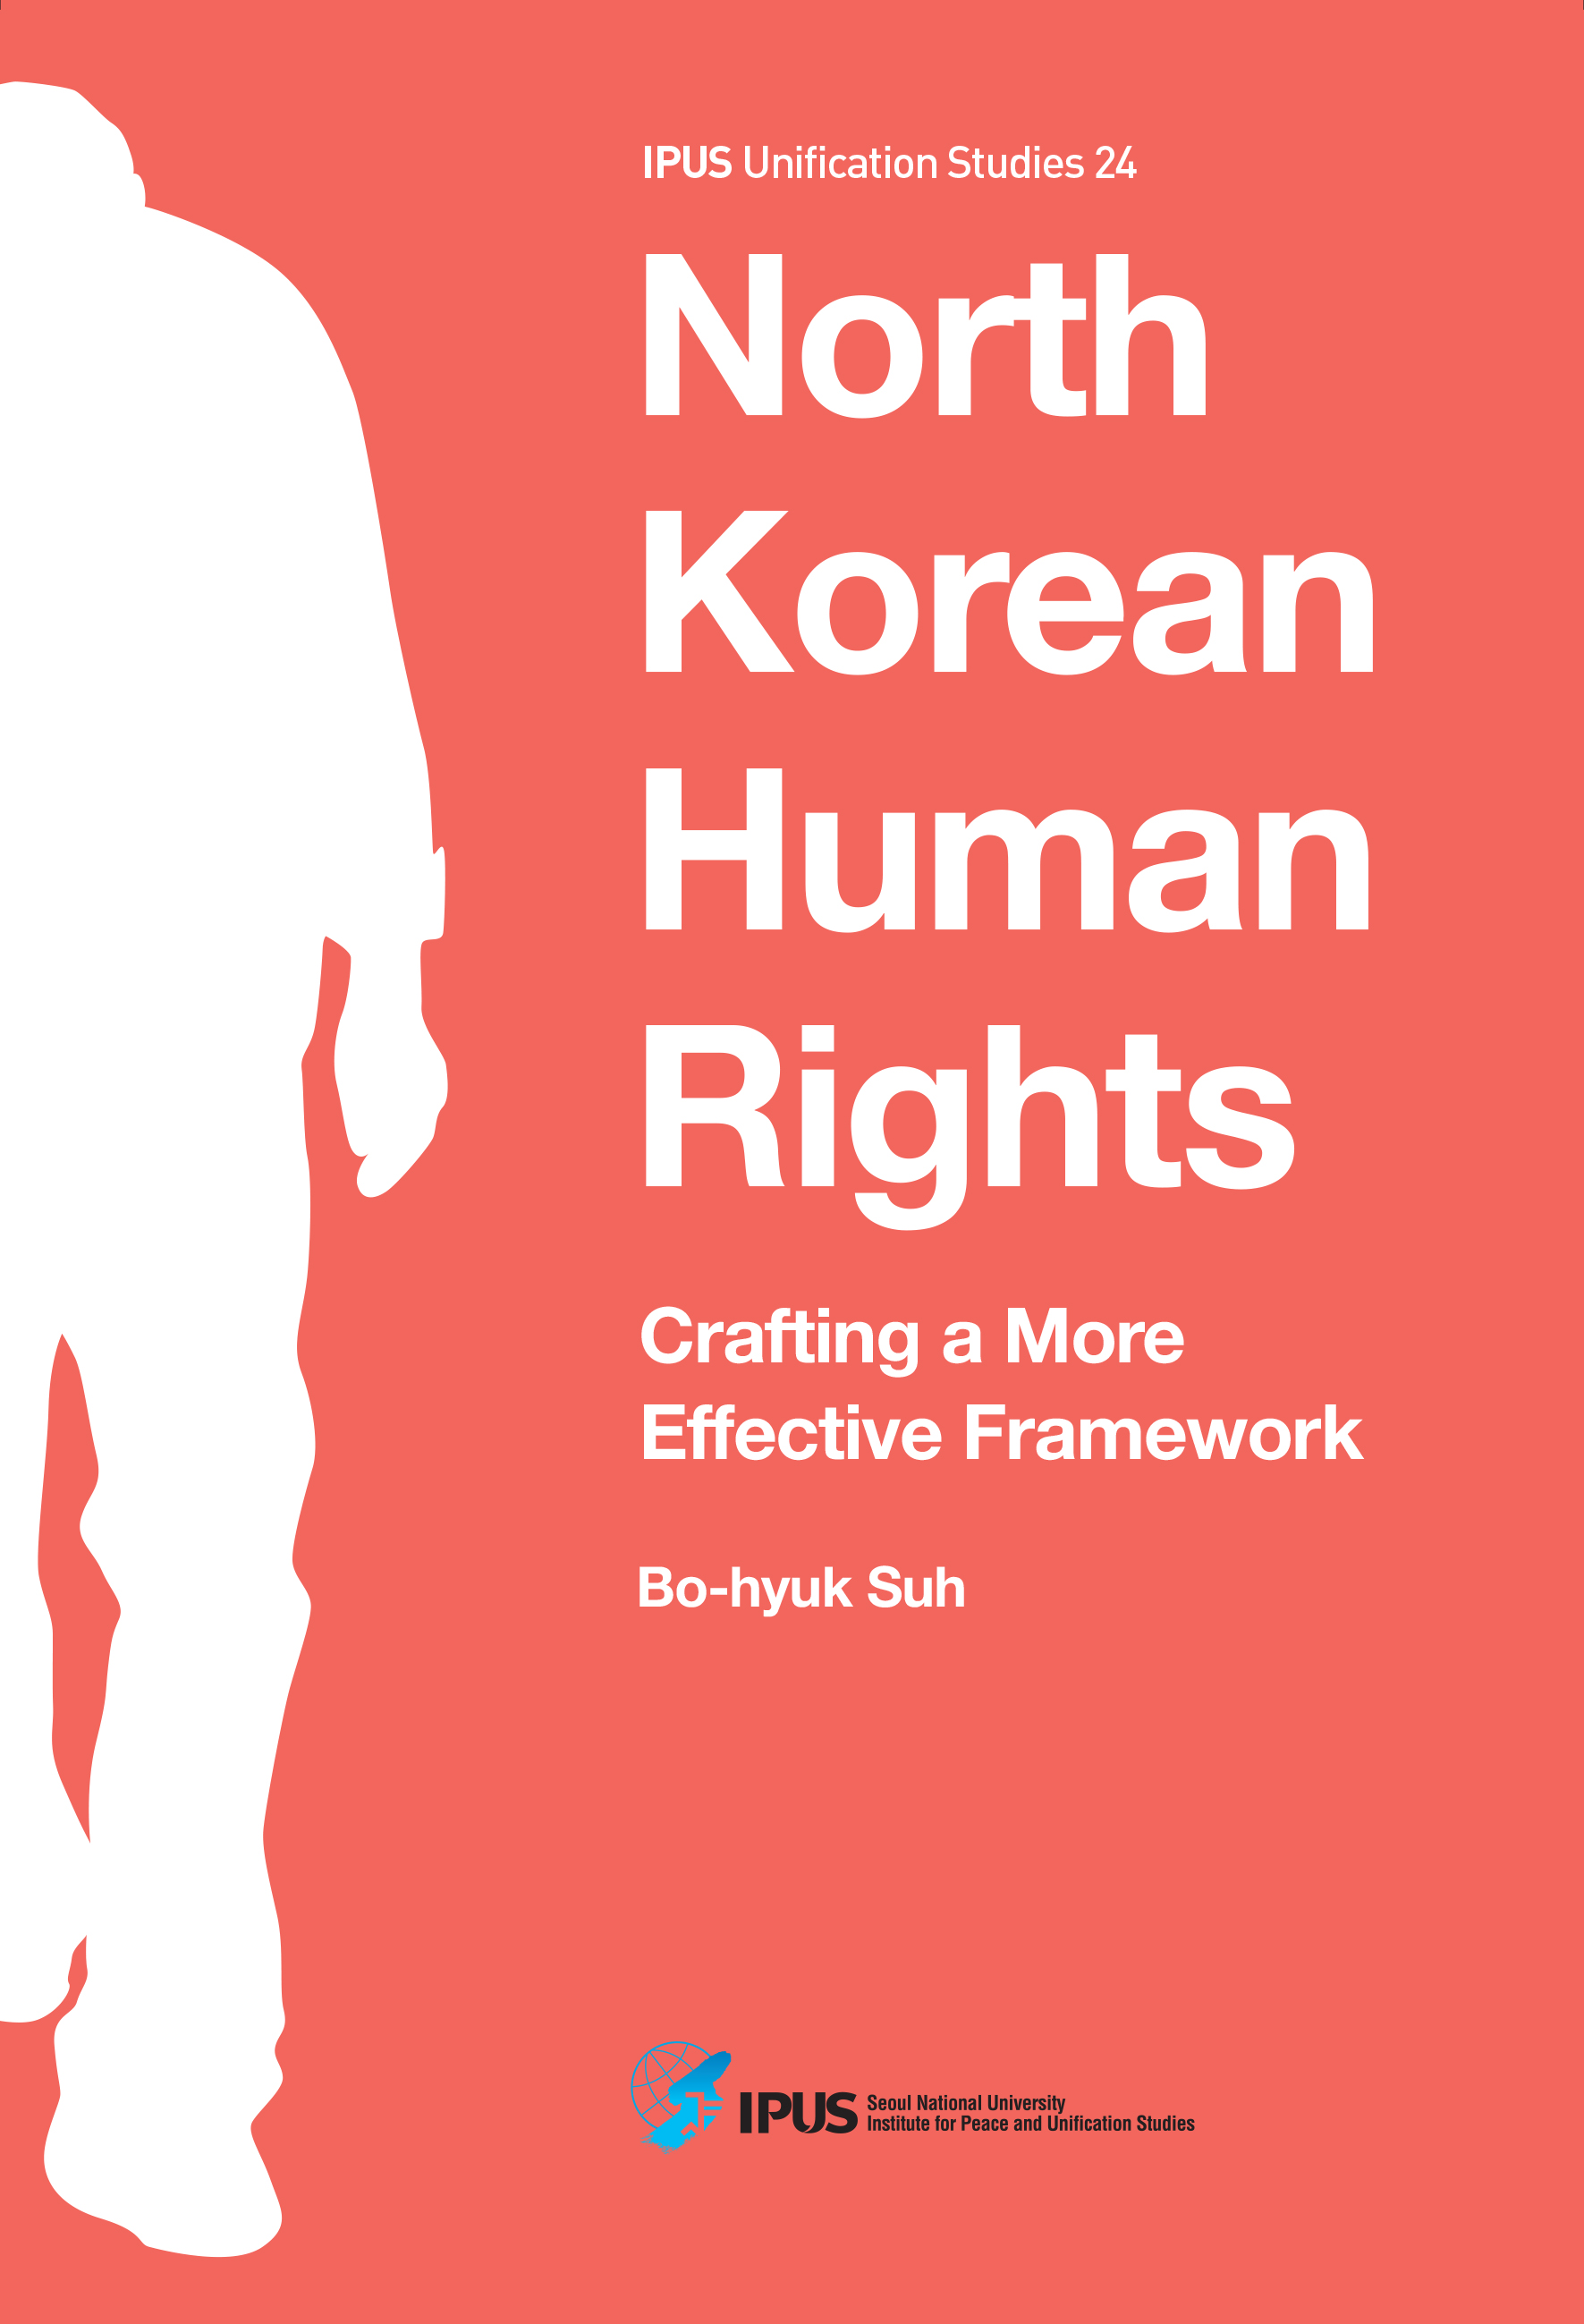 North Korean Human Rights (Cover).jpg